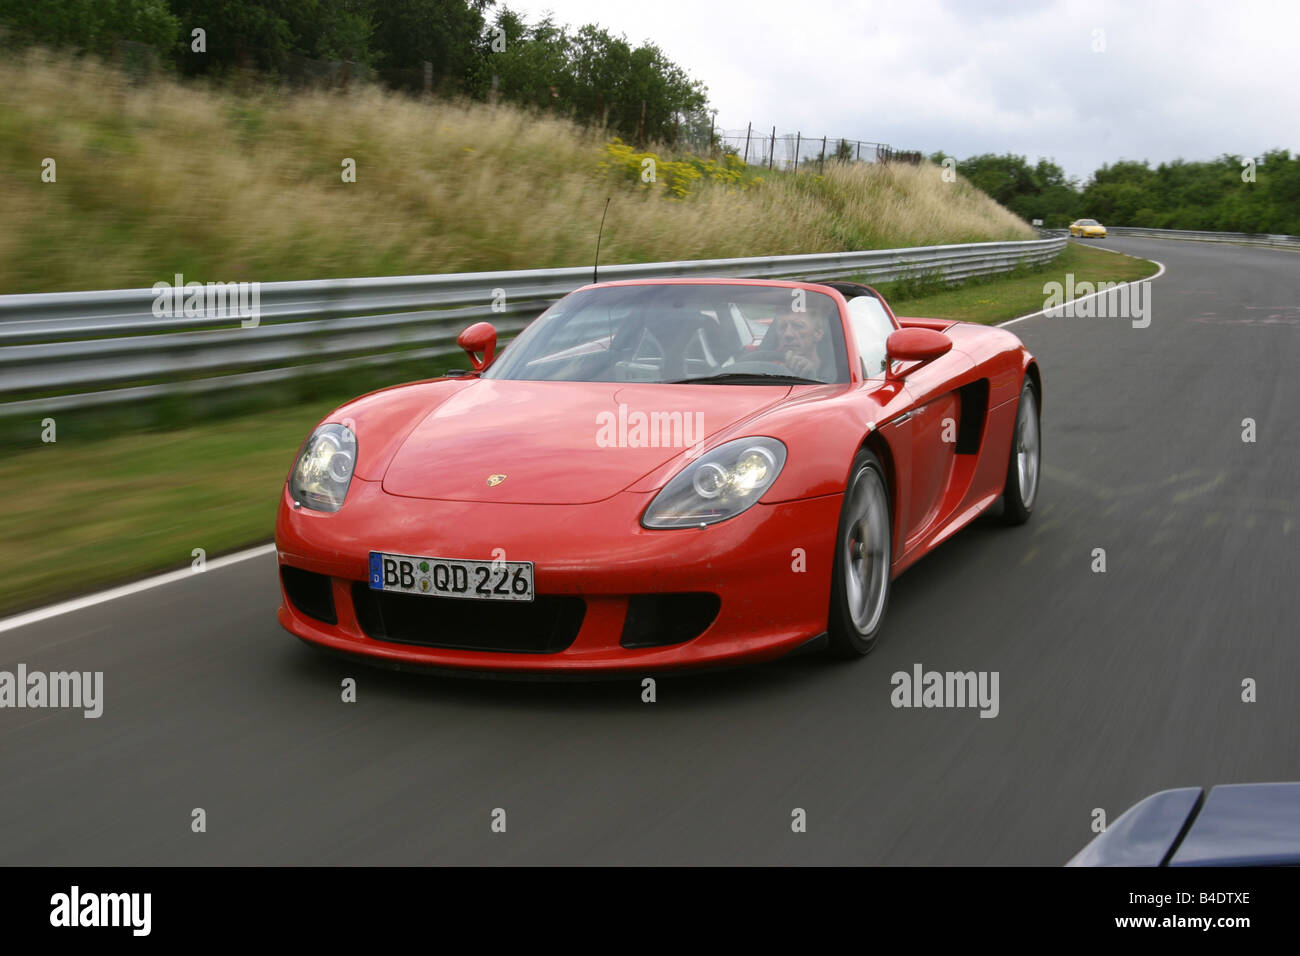 Car, Porsche Carrera GT, model year 2003-, Convertible, red, Test approx.s,  612 PS, Höchstgeschwindigkeit 330 km/h, open top, dr Stock Photo - Alamy